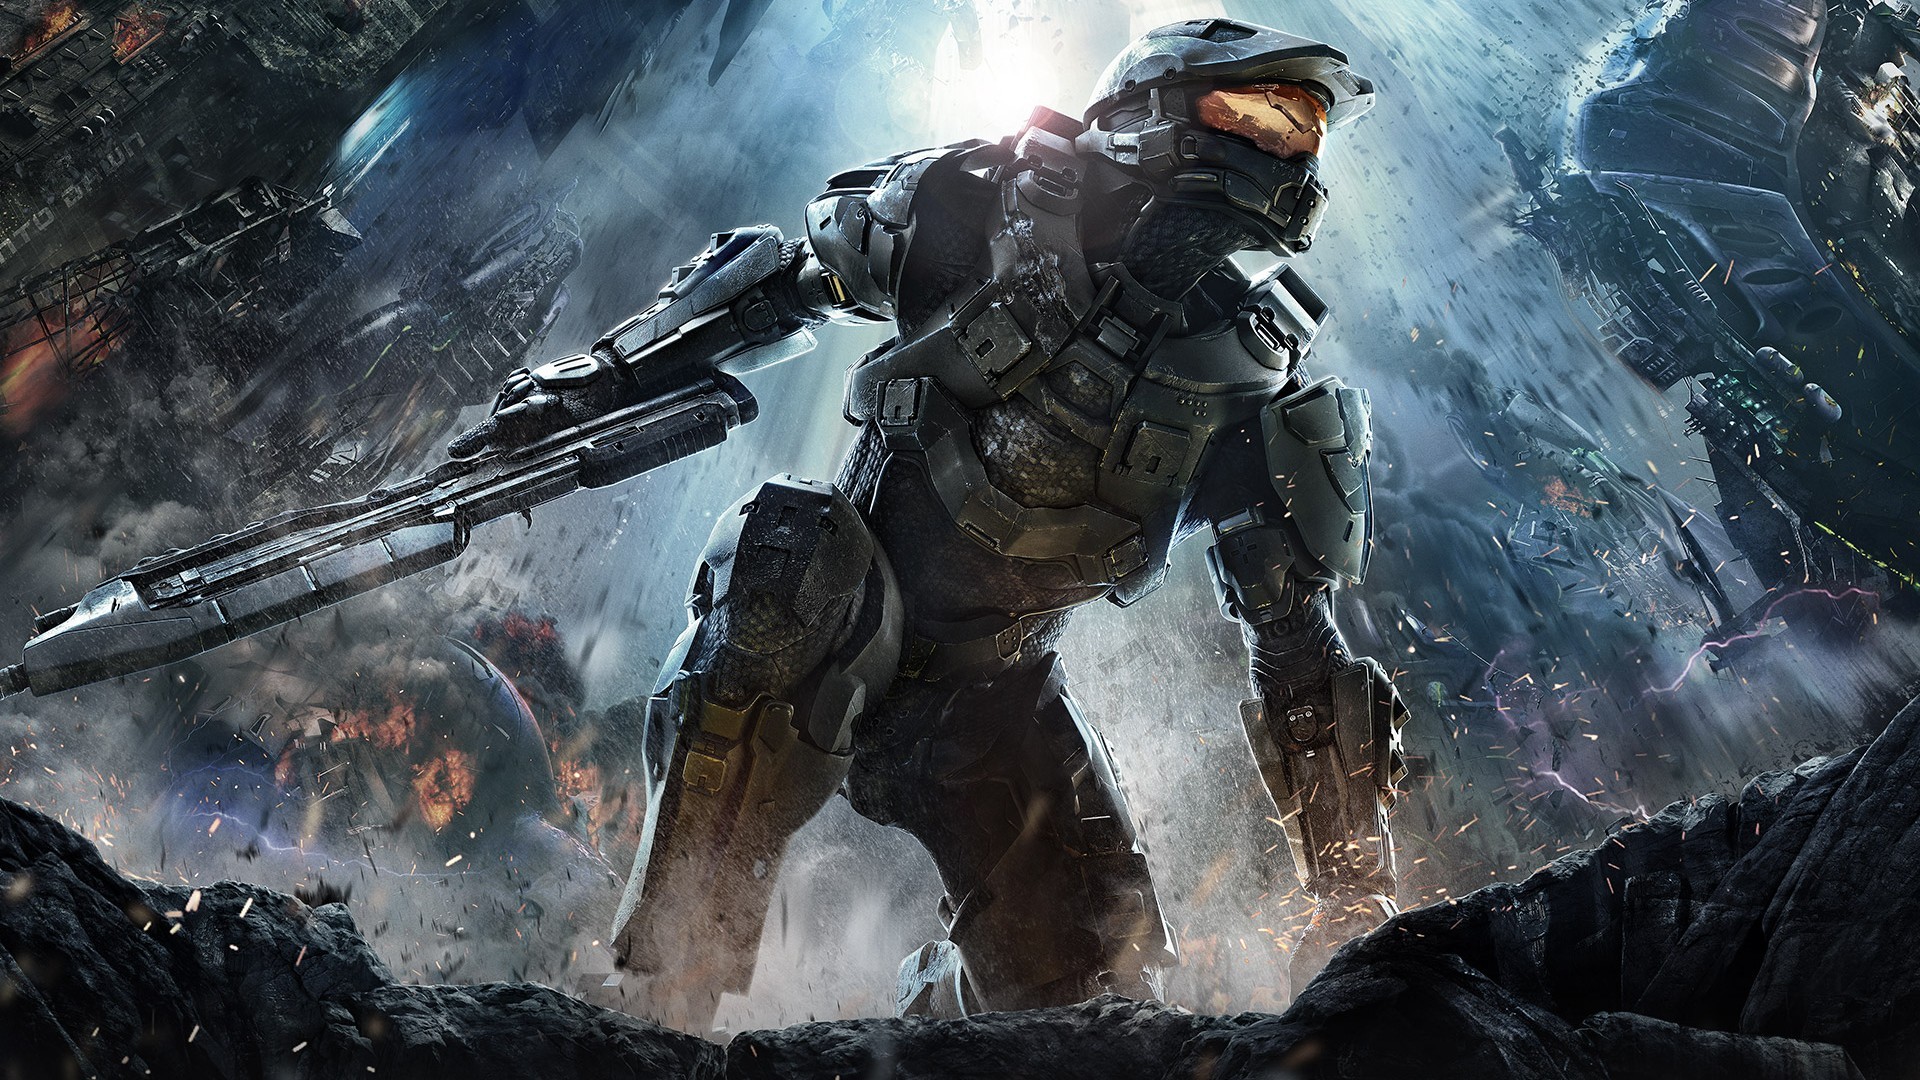 Halo MCC: Halo 4 (PC) – November 17 – Xbox Game Pass for PC